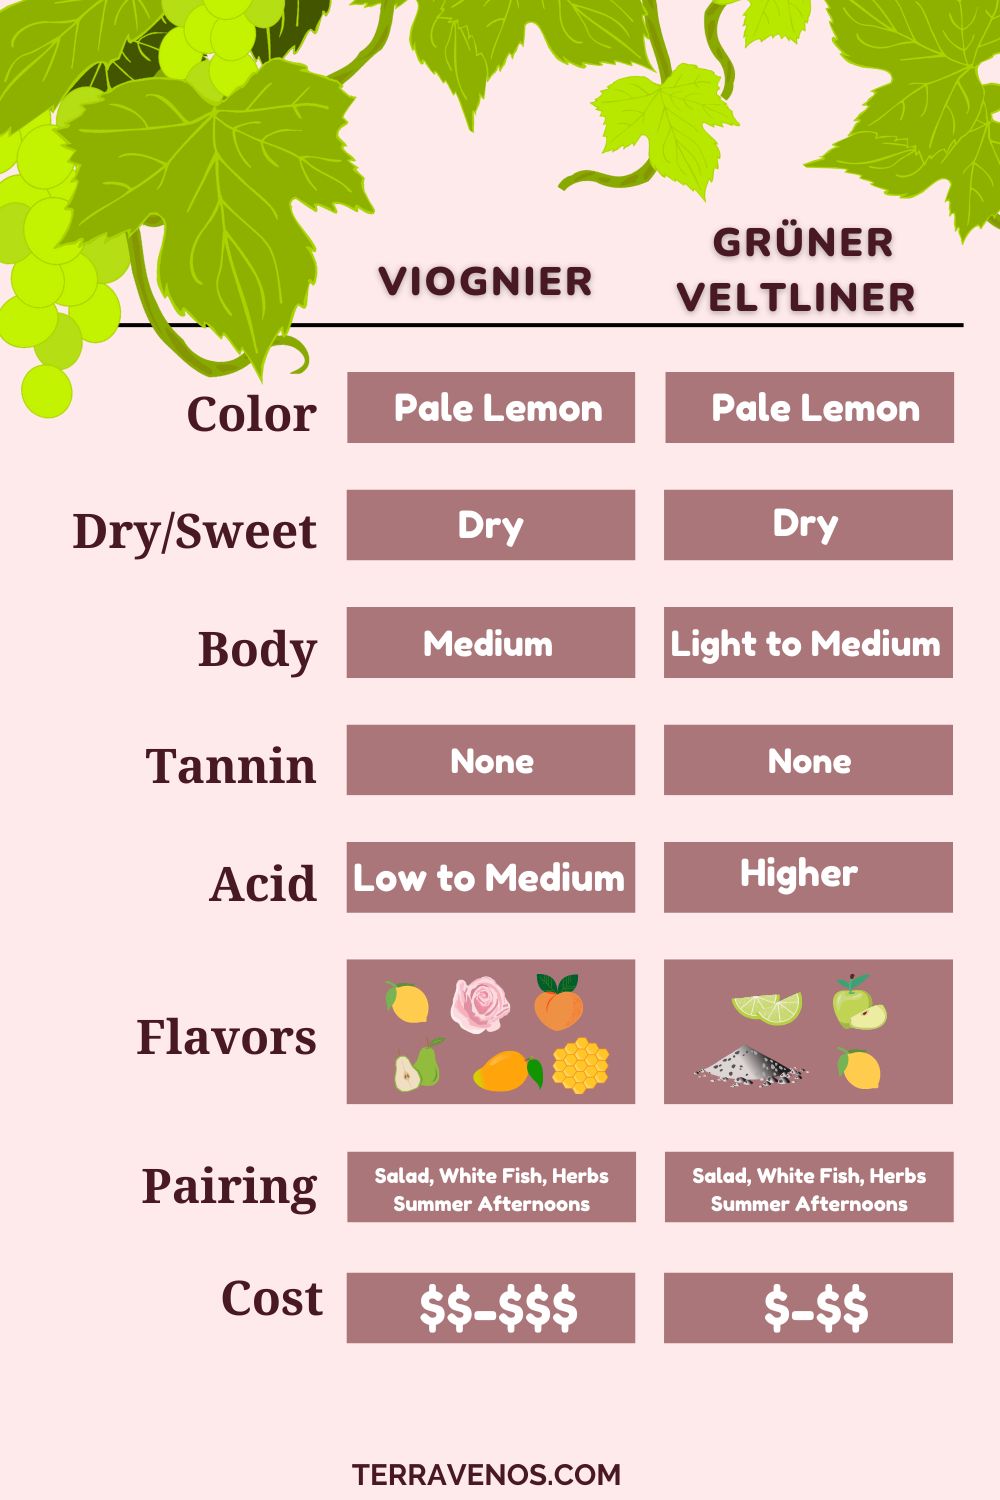 gruner veltliner vs viogneir wine infographic - comparison